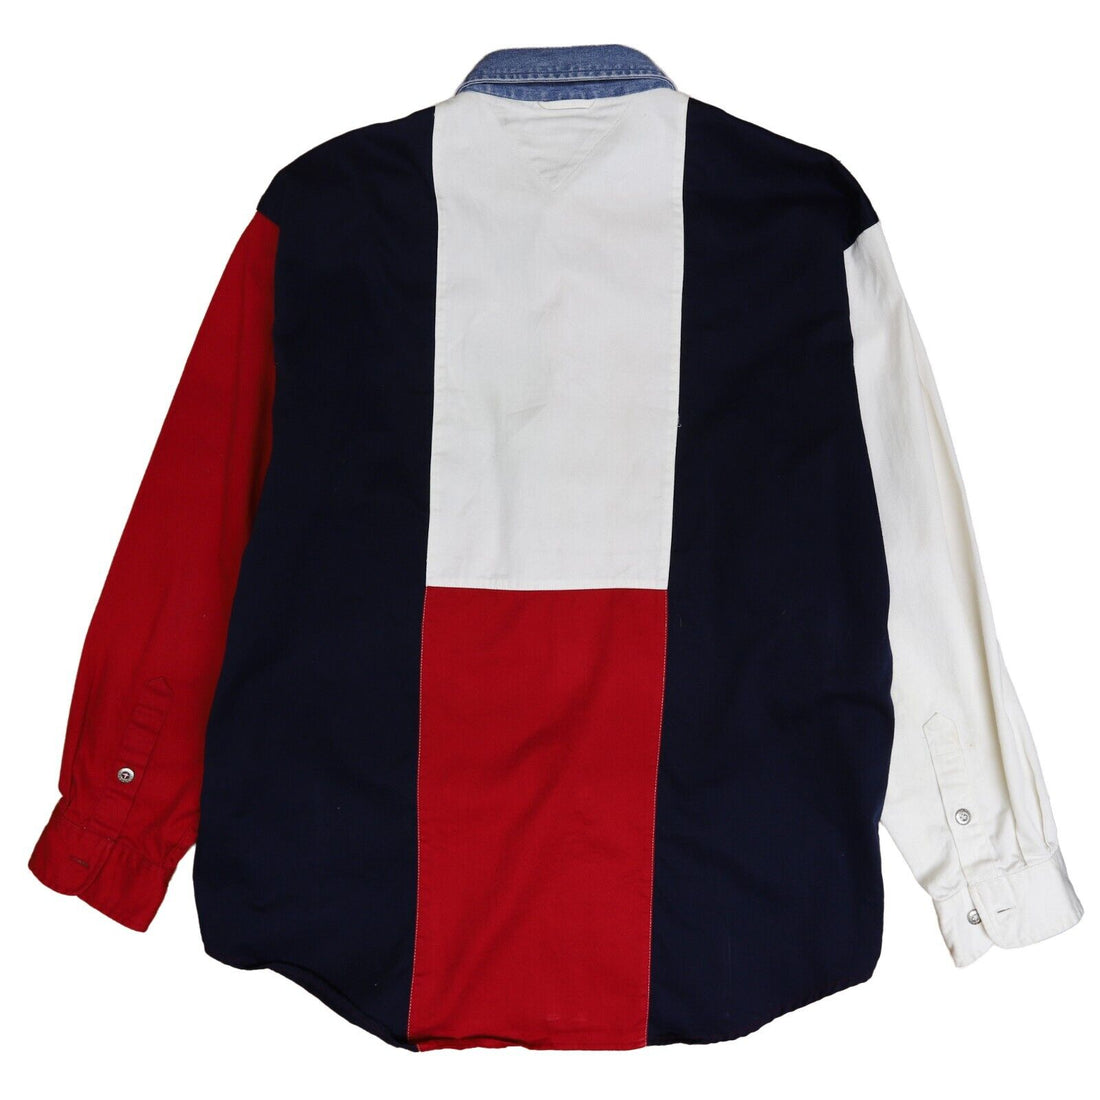 Vintage Tommy Hilfiger Star Button Up Shirt Size Large America USA